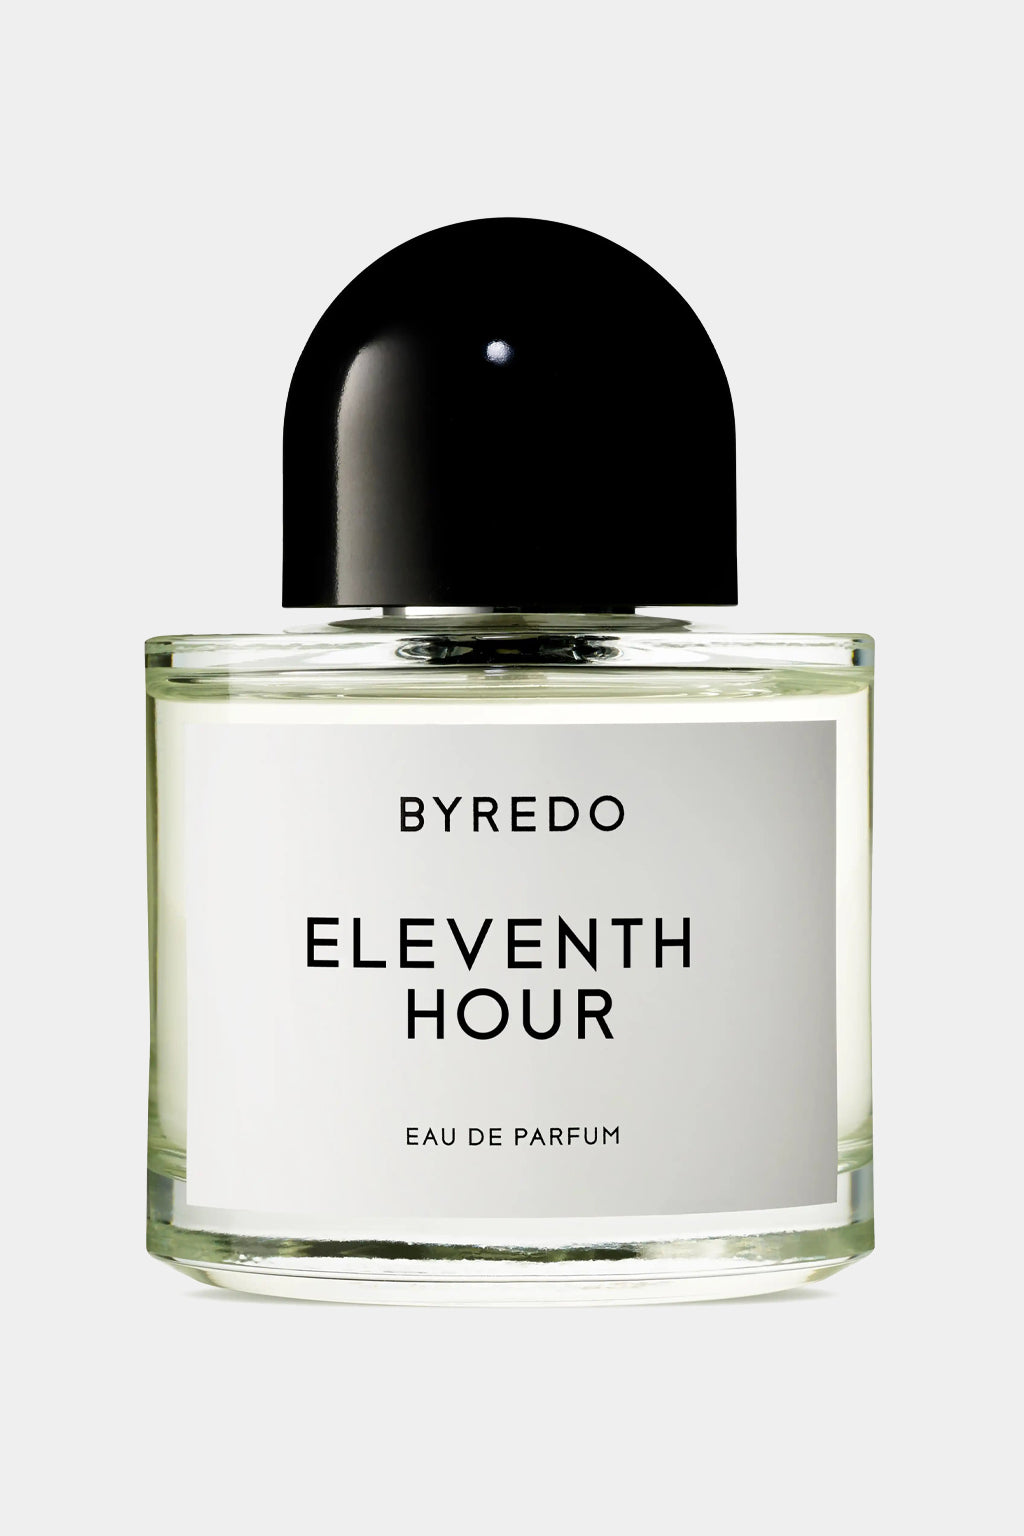 Byredo - Super Cedar Eau de Parfum